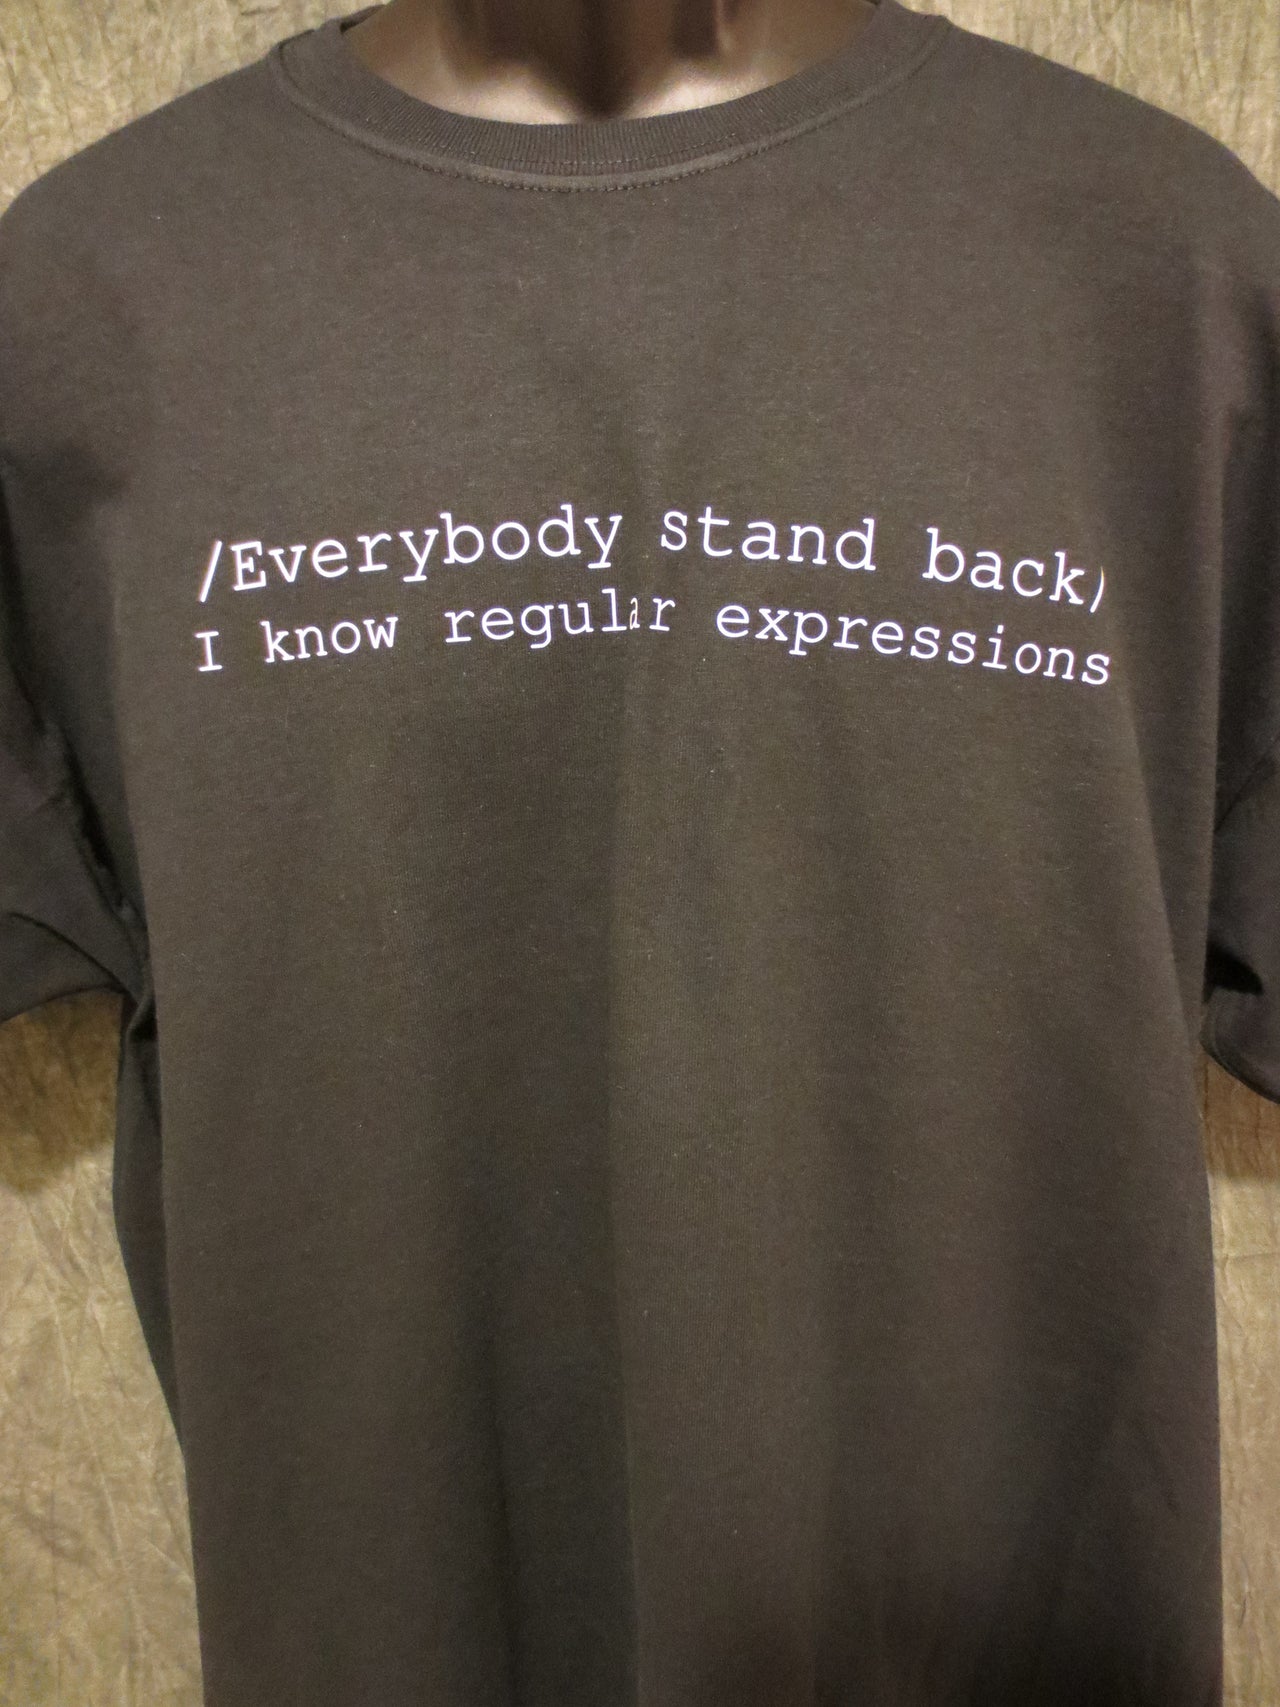 Everybody Stand Back: I Know Regular Expressions Tshirt: Black With White Print - TshirtNow.net - 3